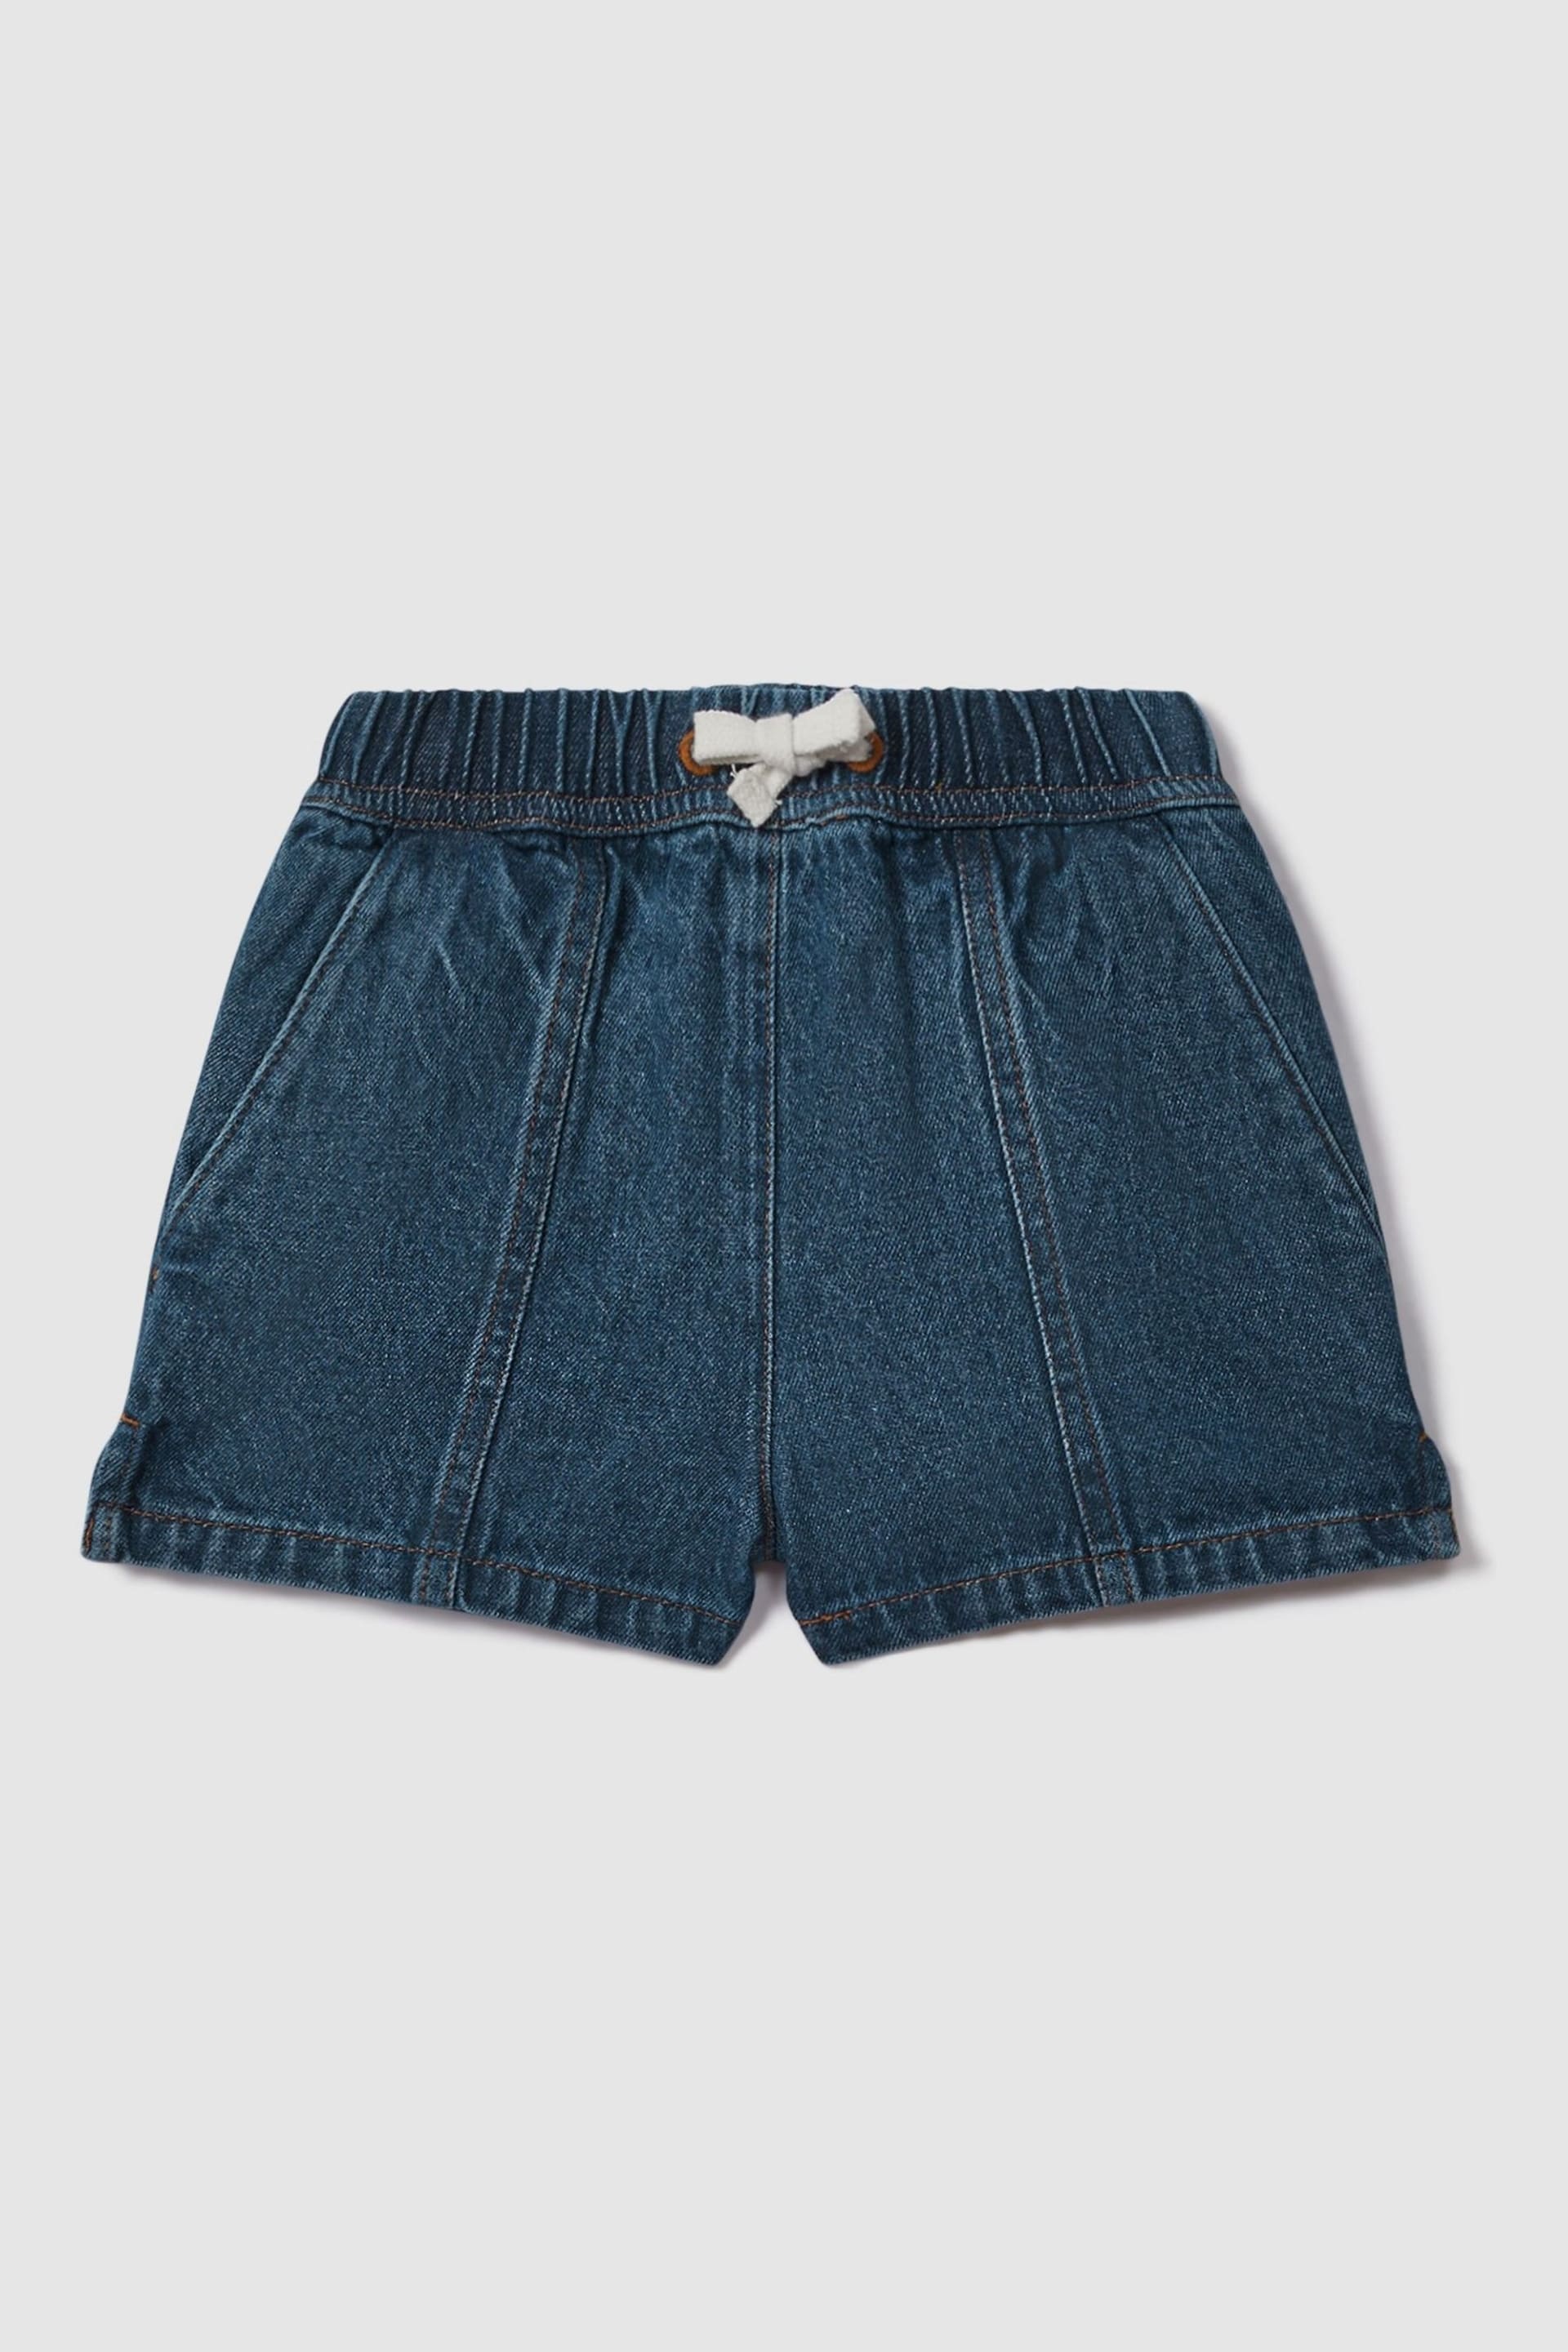 Reiss Blue Marloe Junior Drawstring Denim Shorts - Image 2 of 4